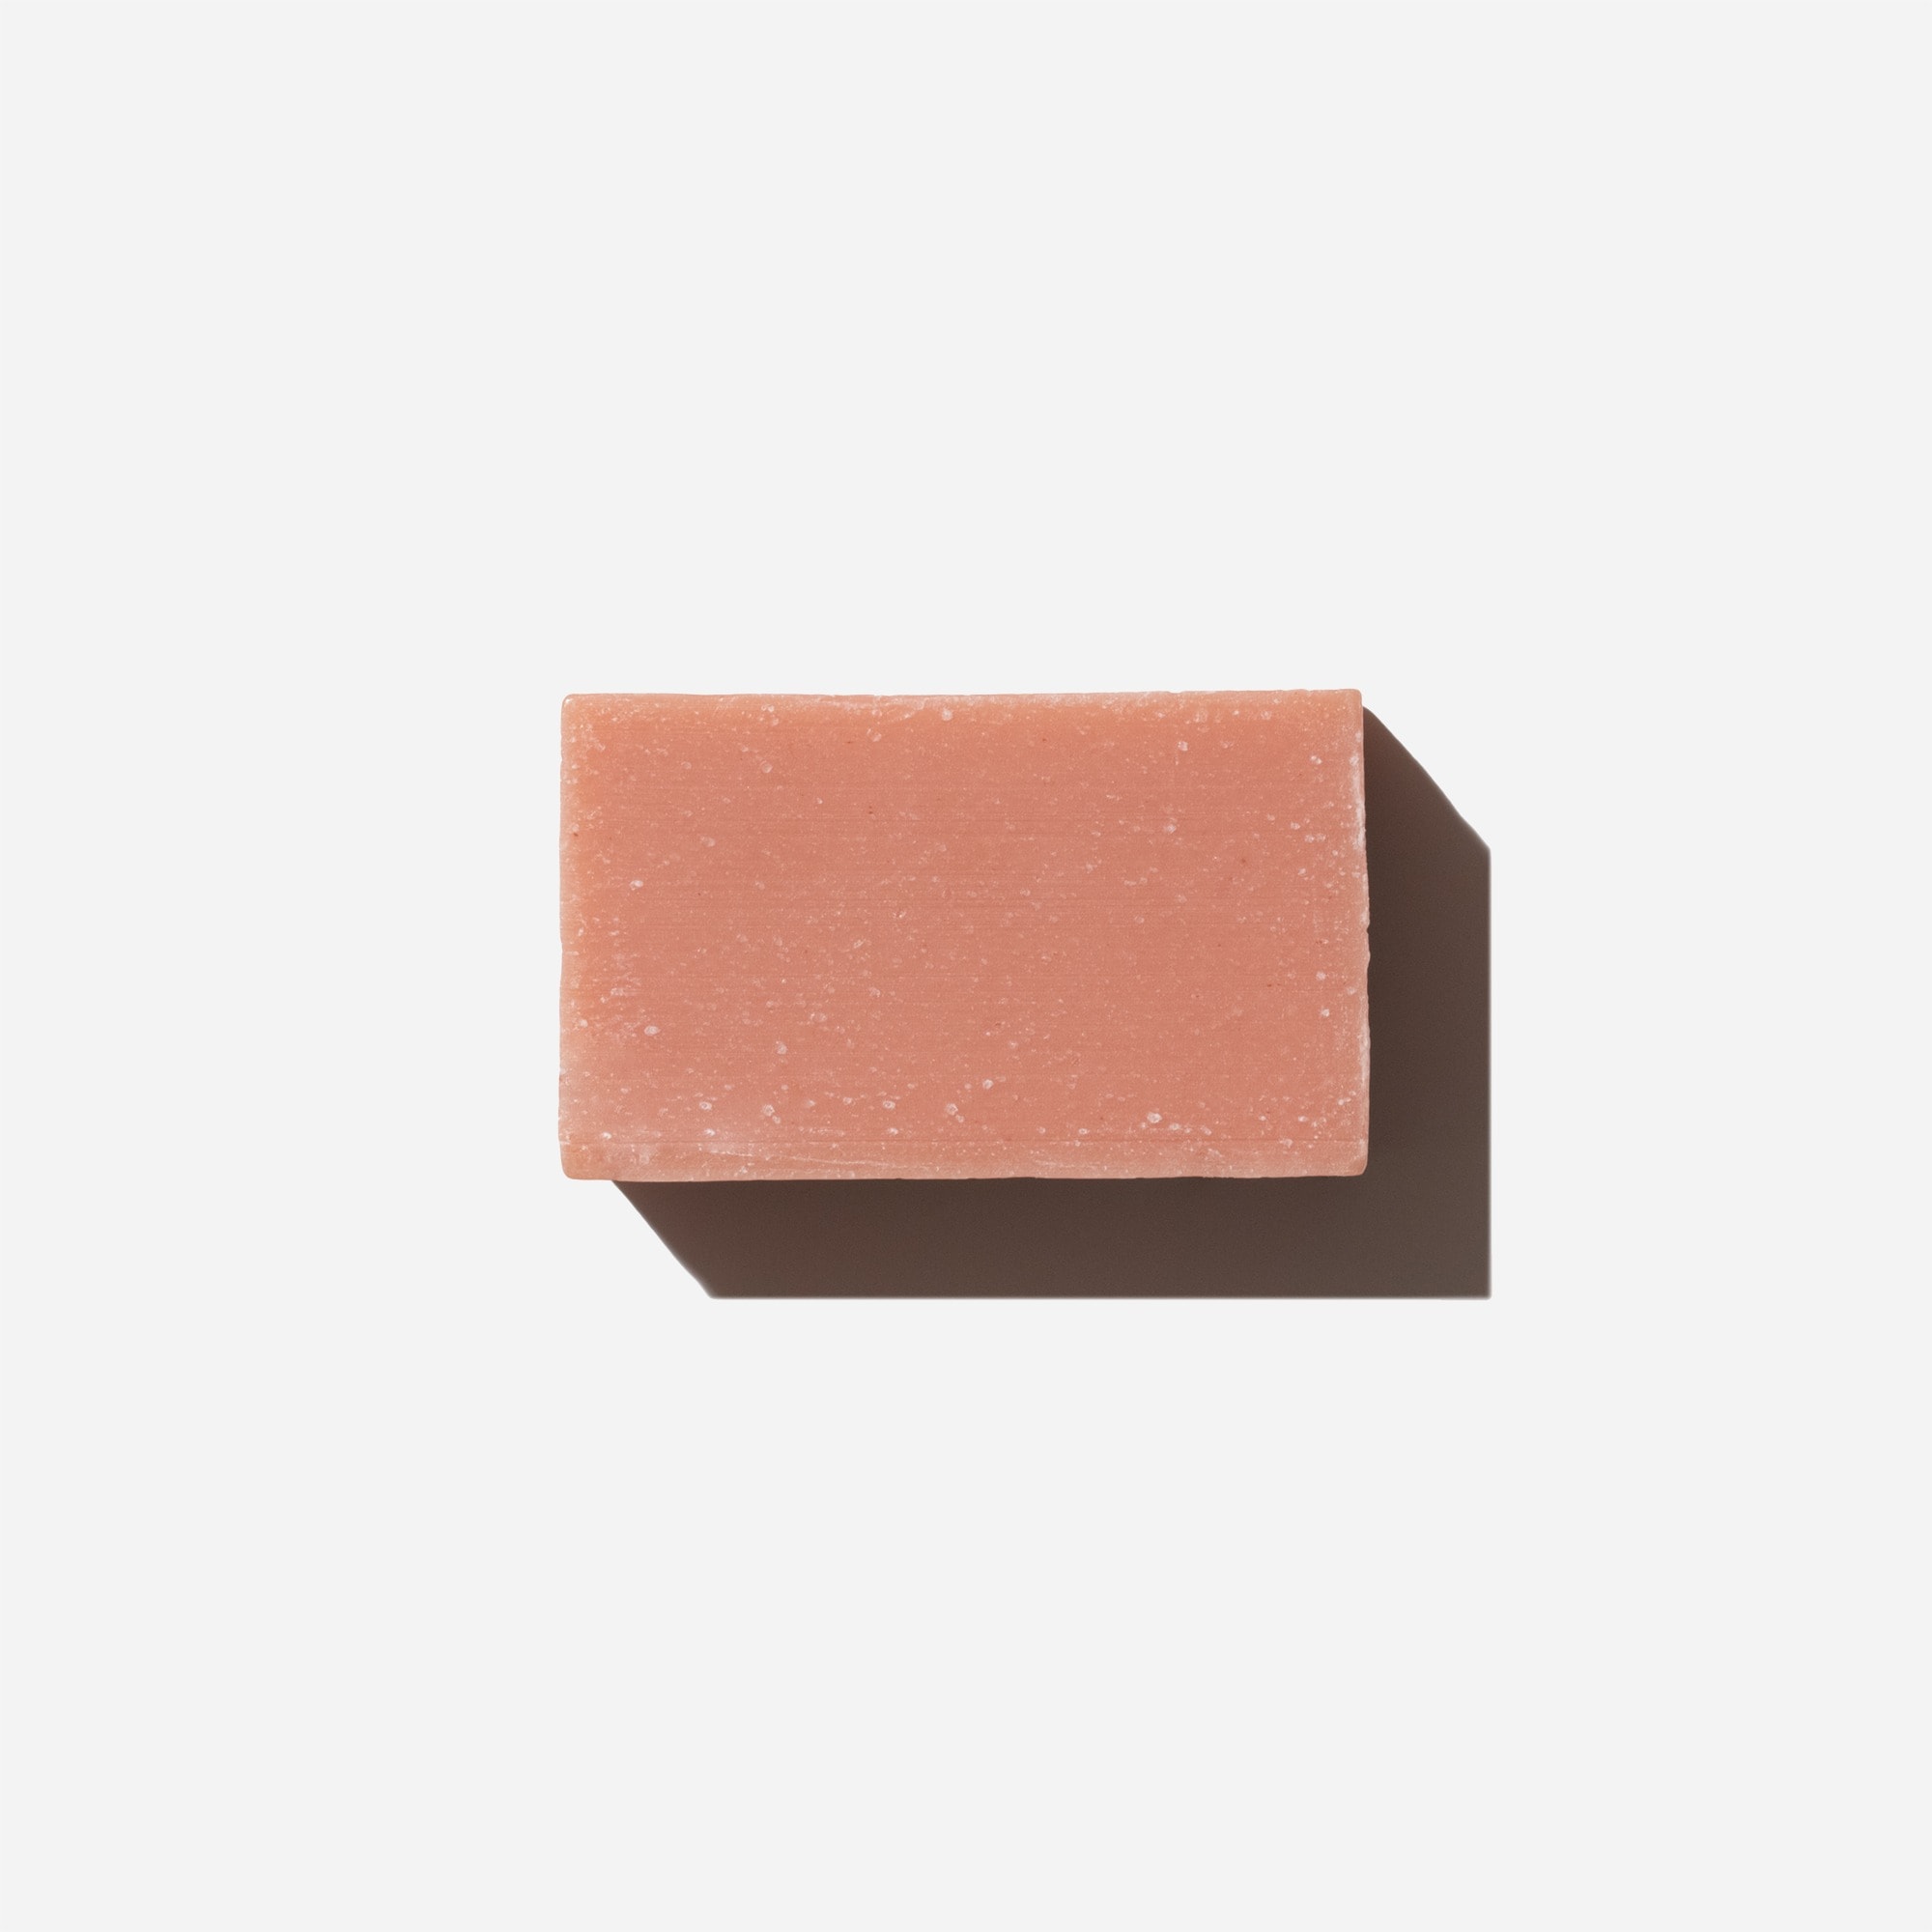 Jcrew Sade Baron la rose sensitive pink-clay bar soap